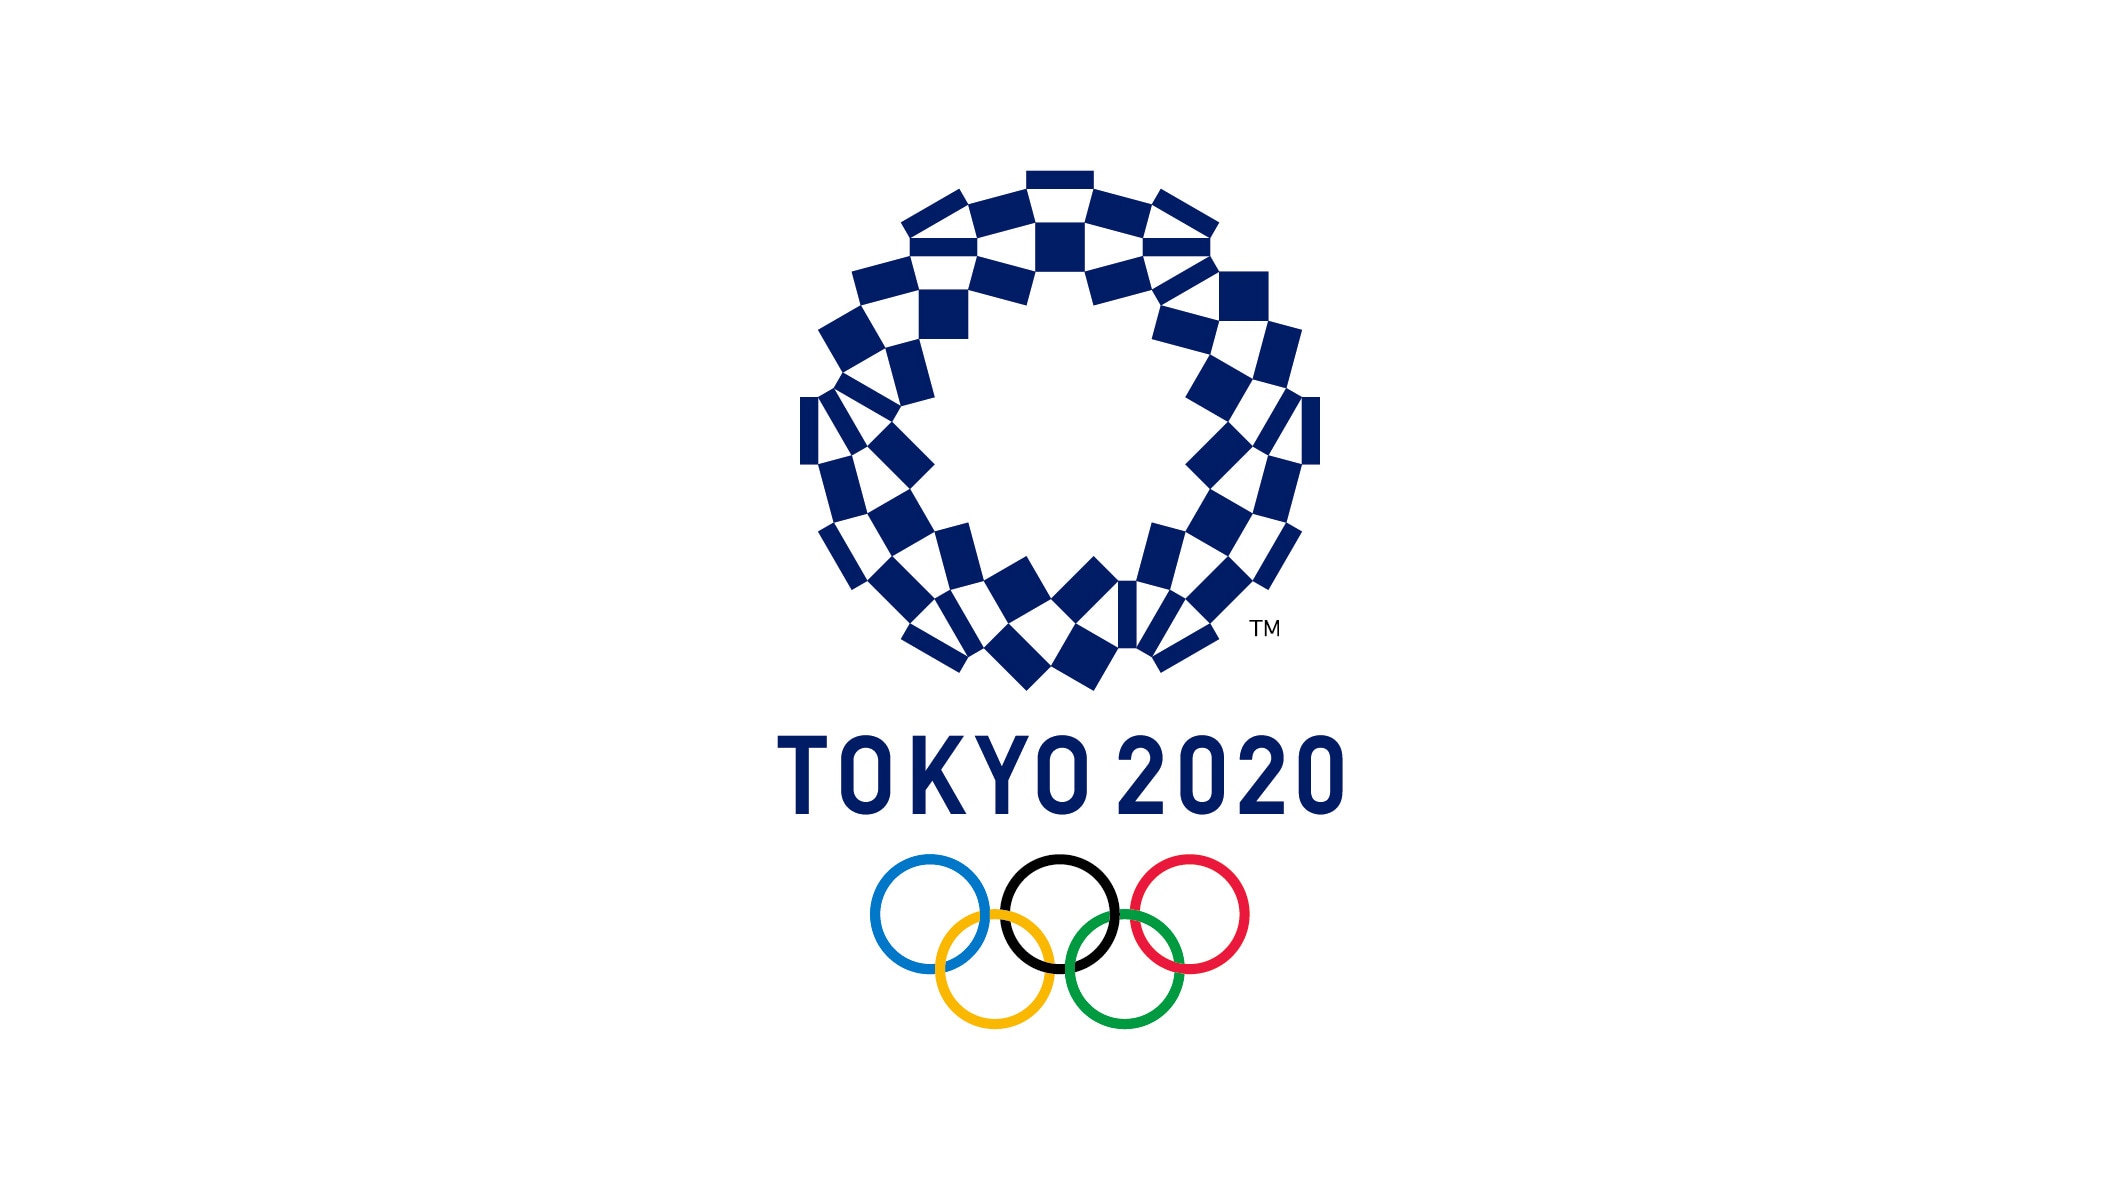 New Tokyo 2020 emblem symbolises unity in diversity - Olympic News